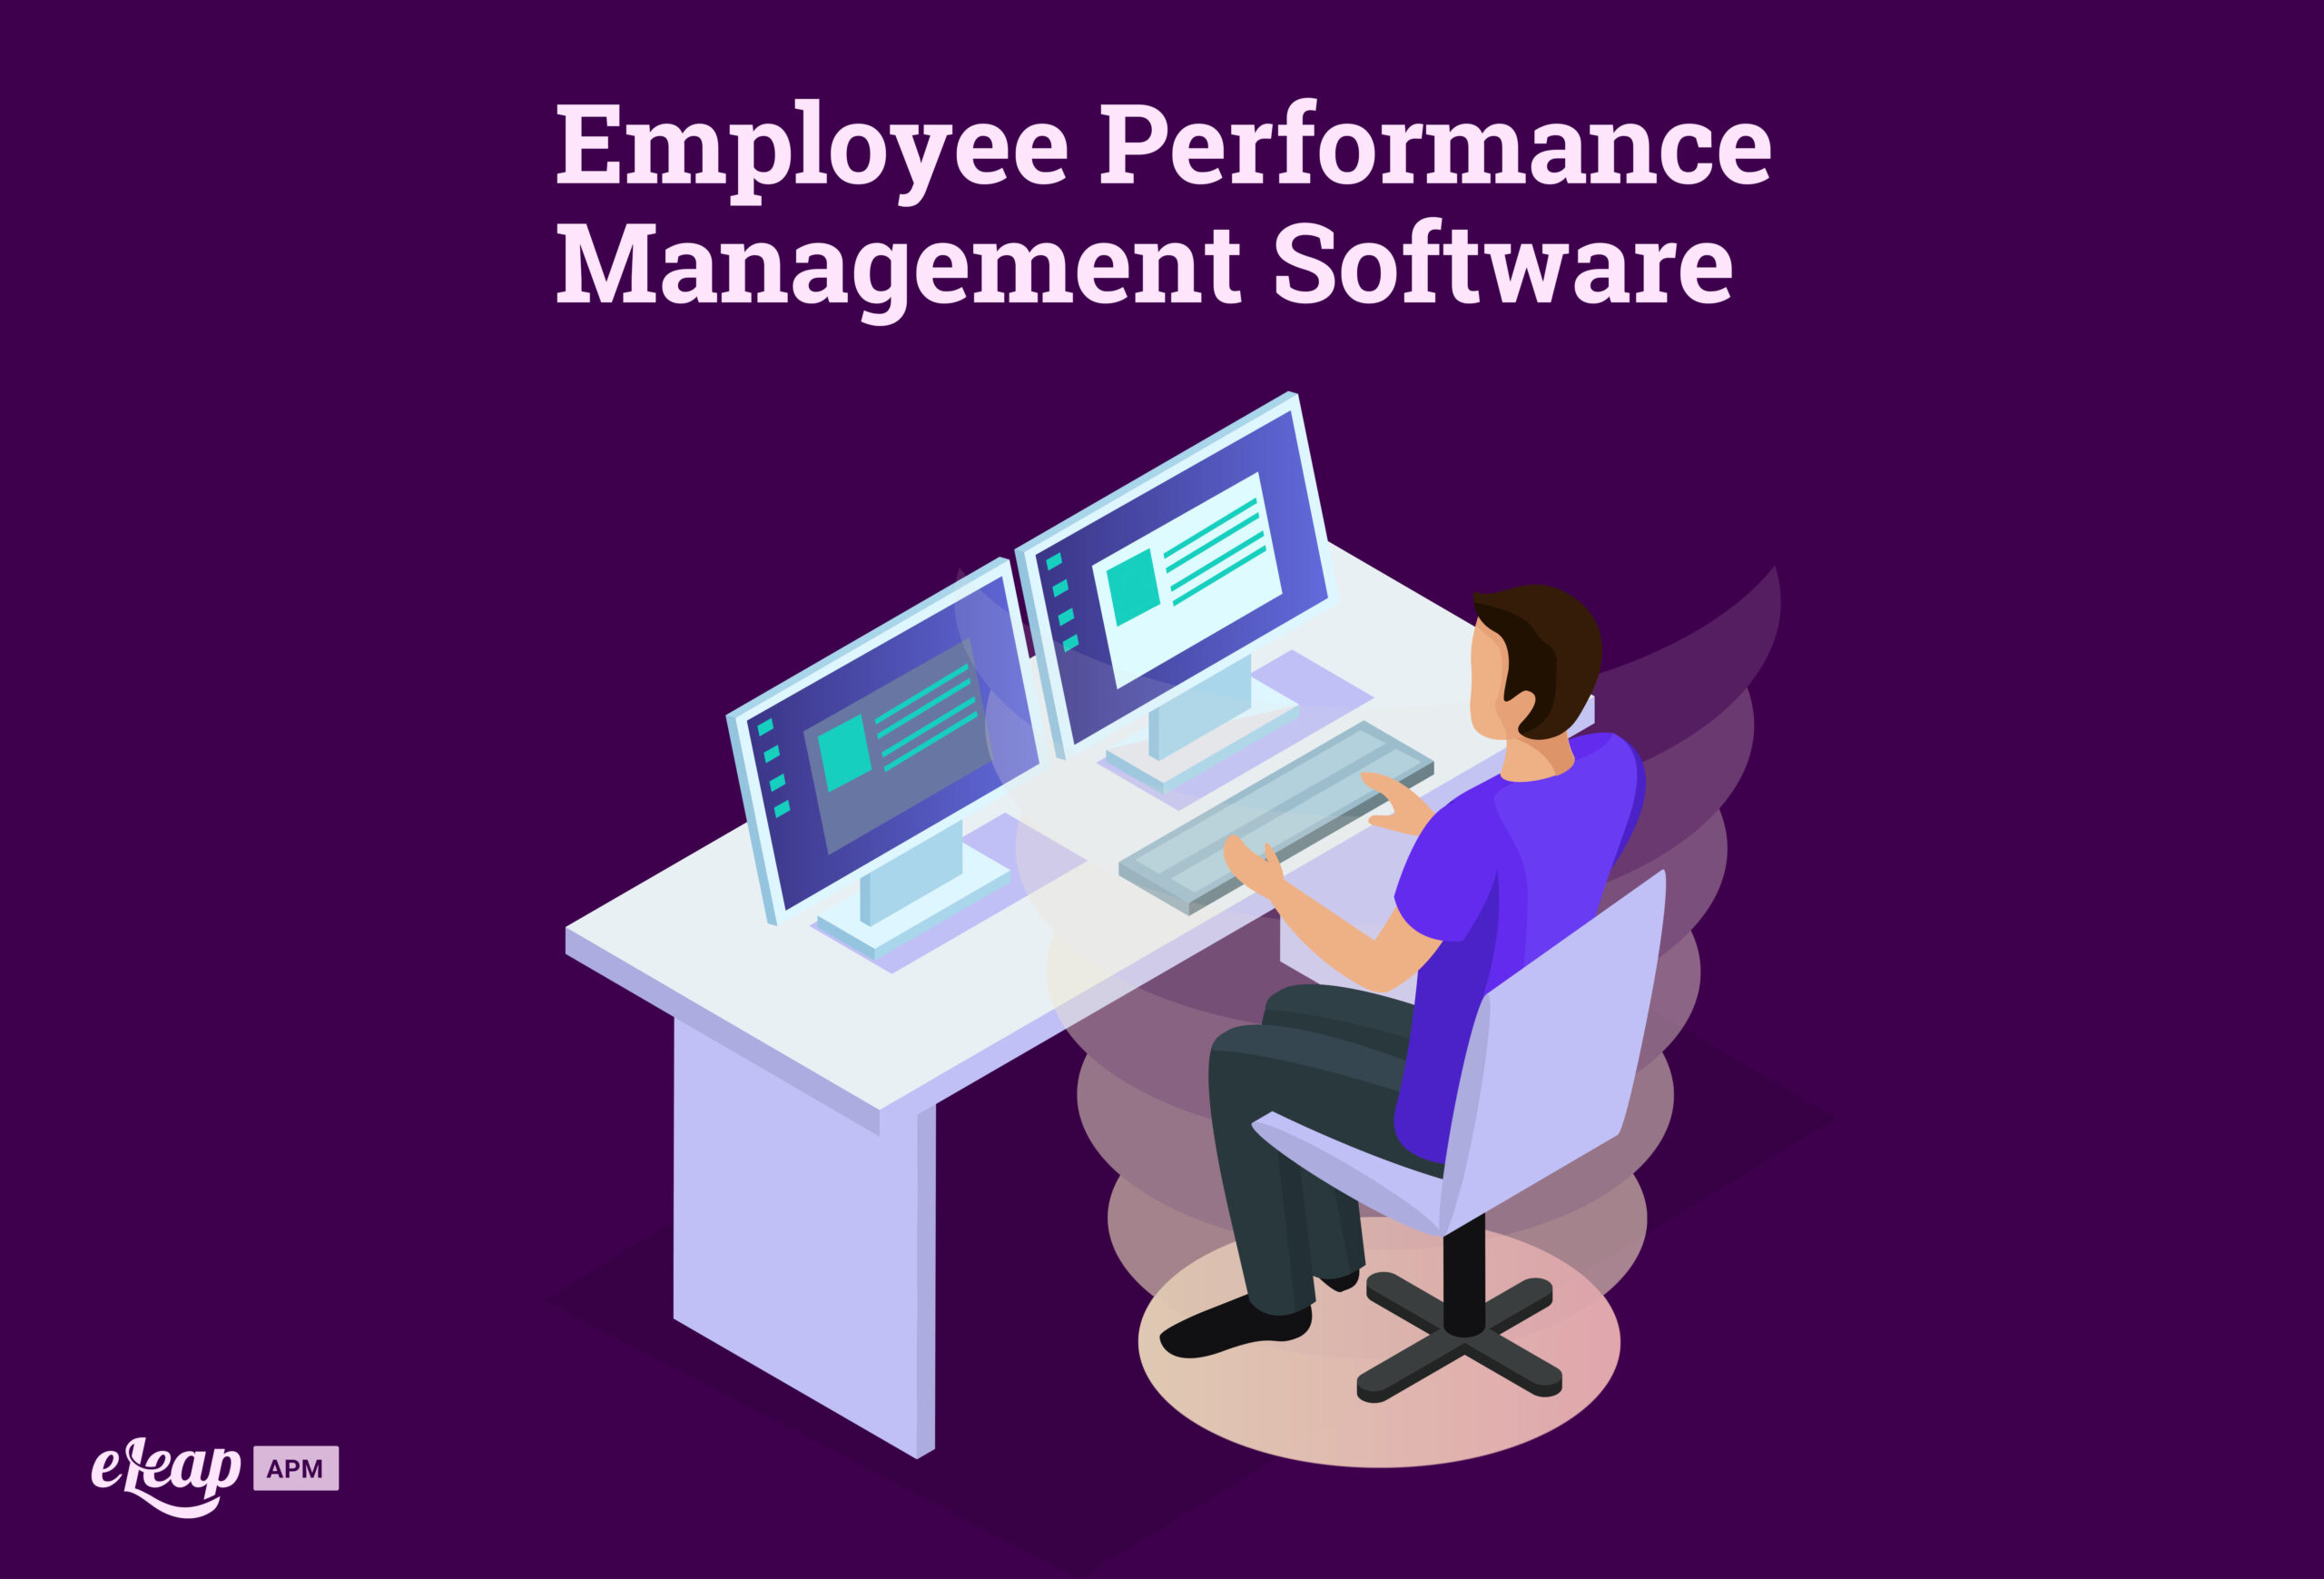 Employee Performance Management Software